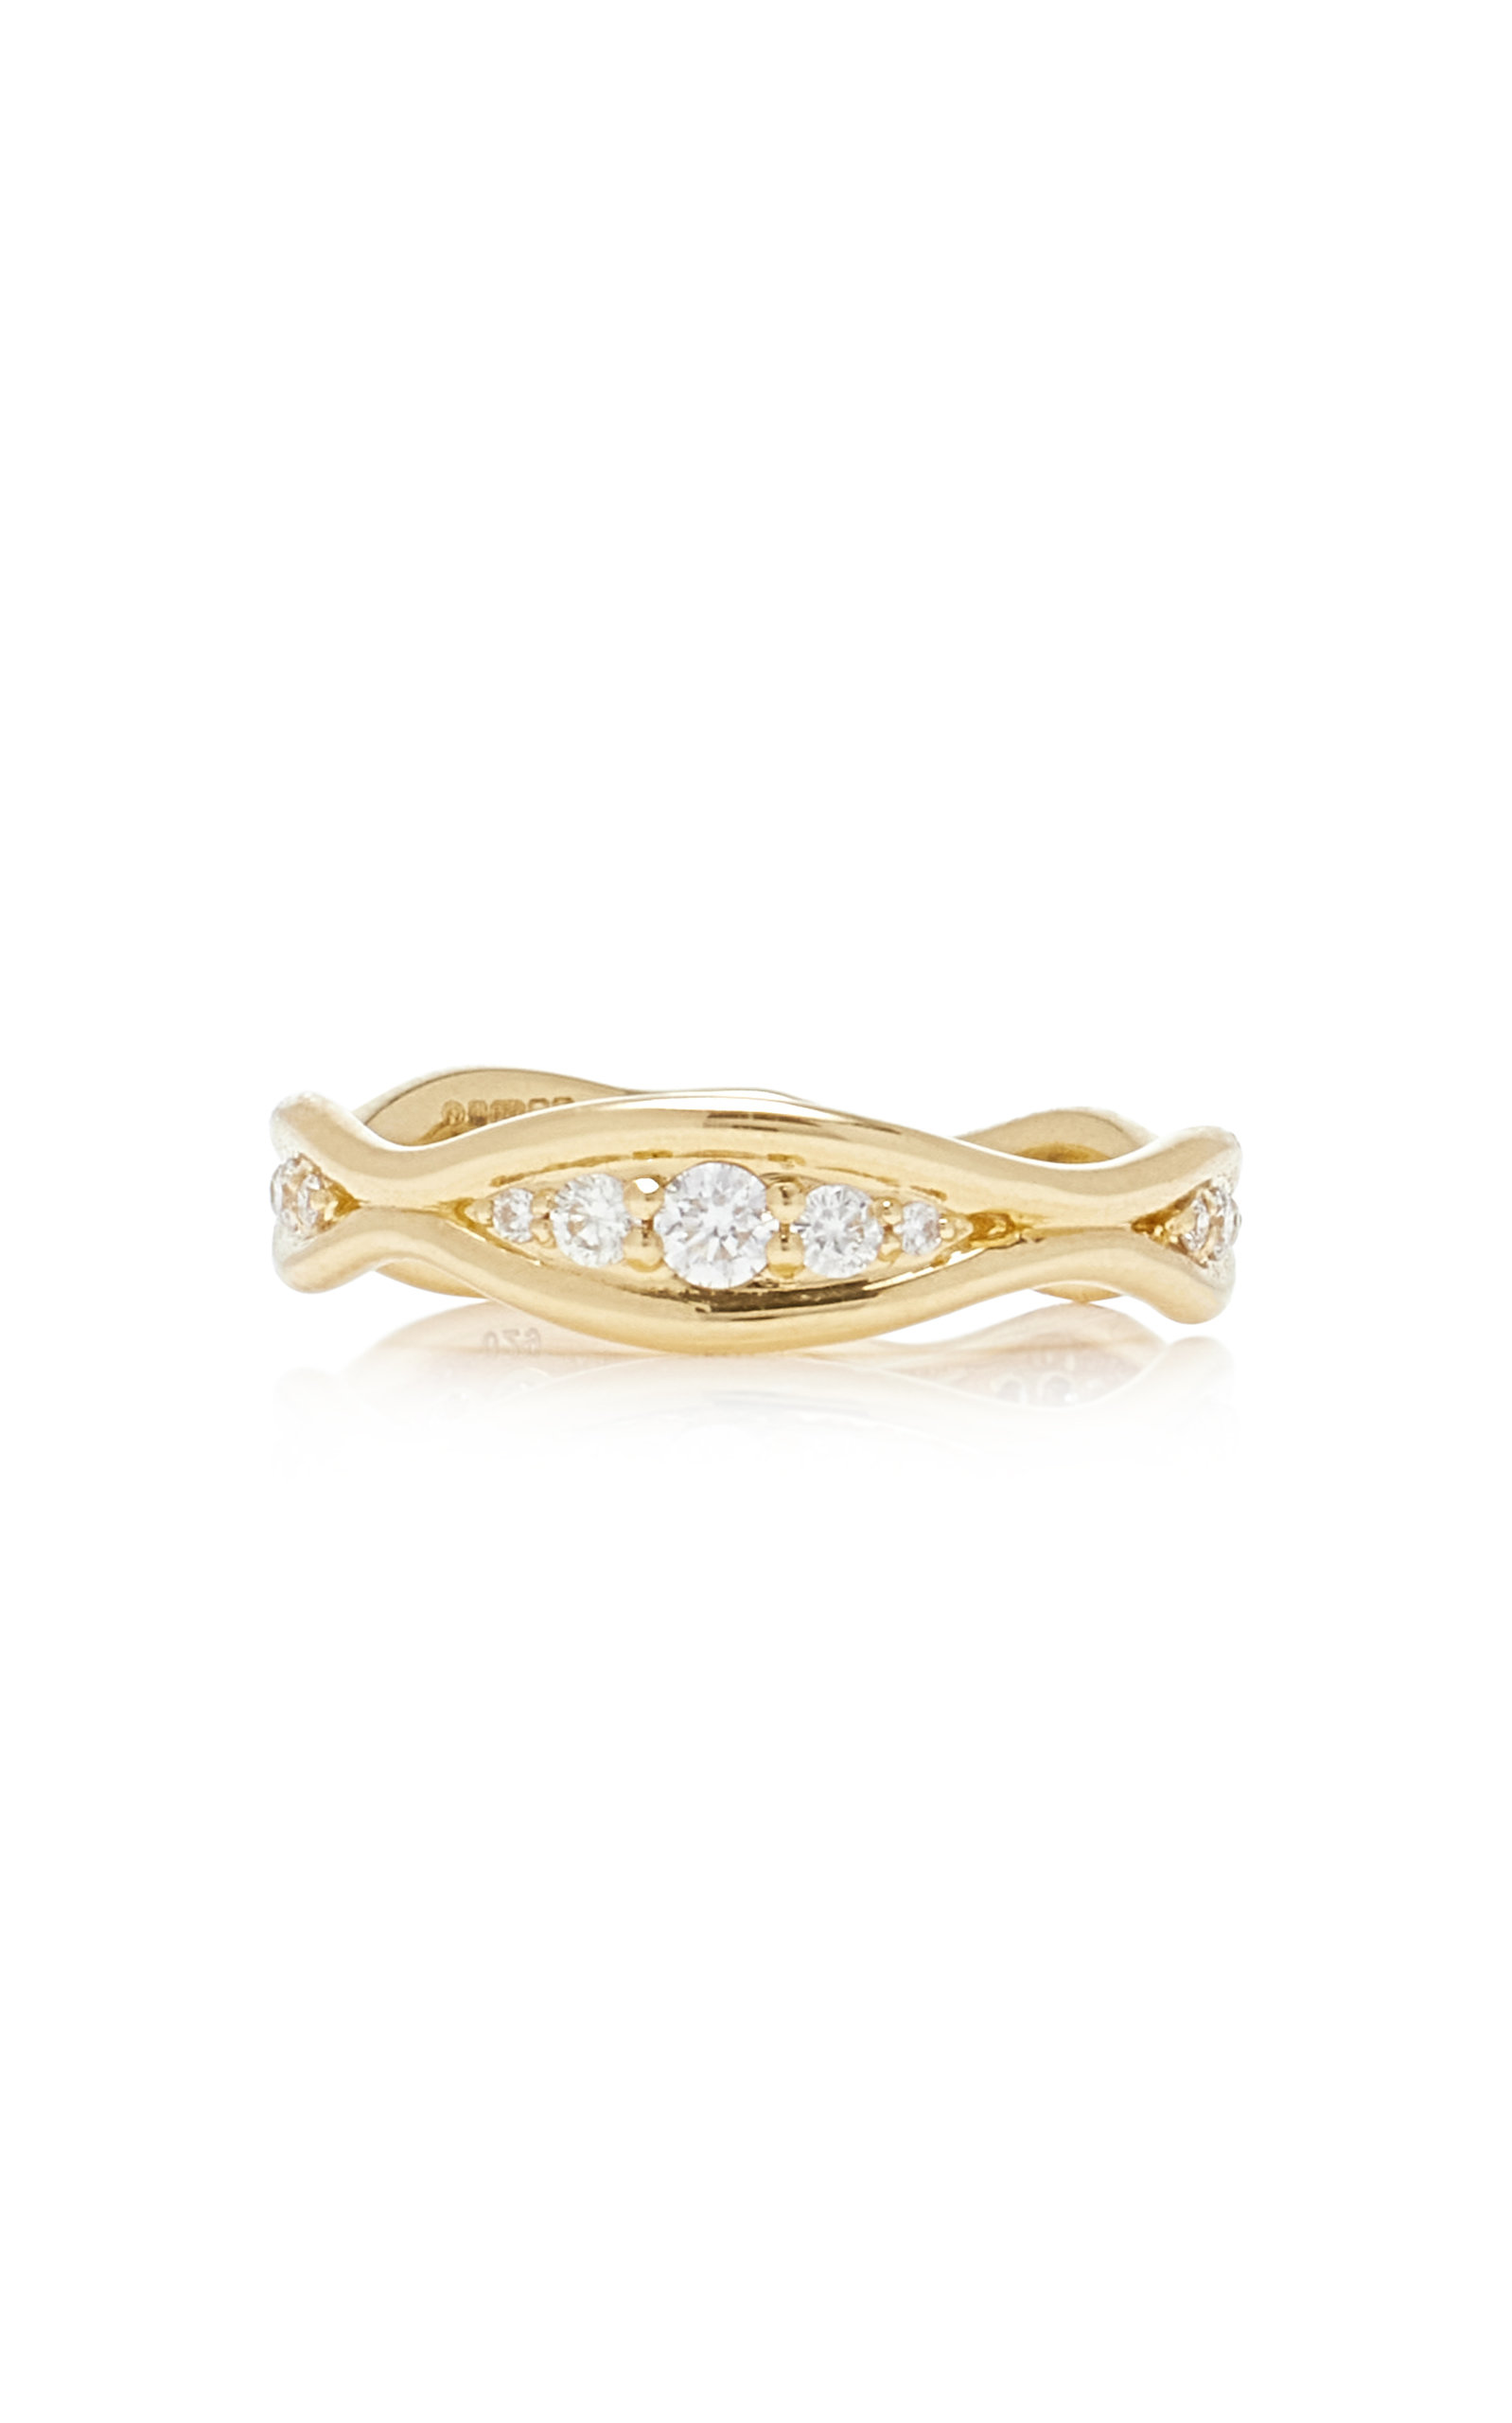 The Fluid Diamonds 18K Yellow Gold and Diamond Ring